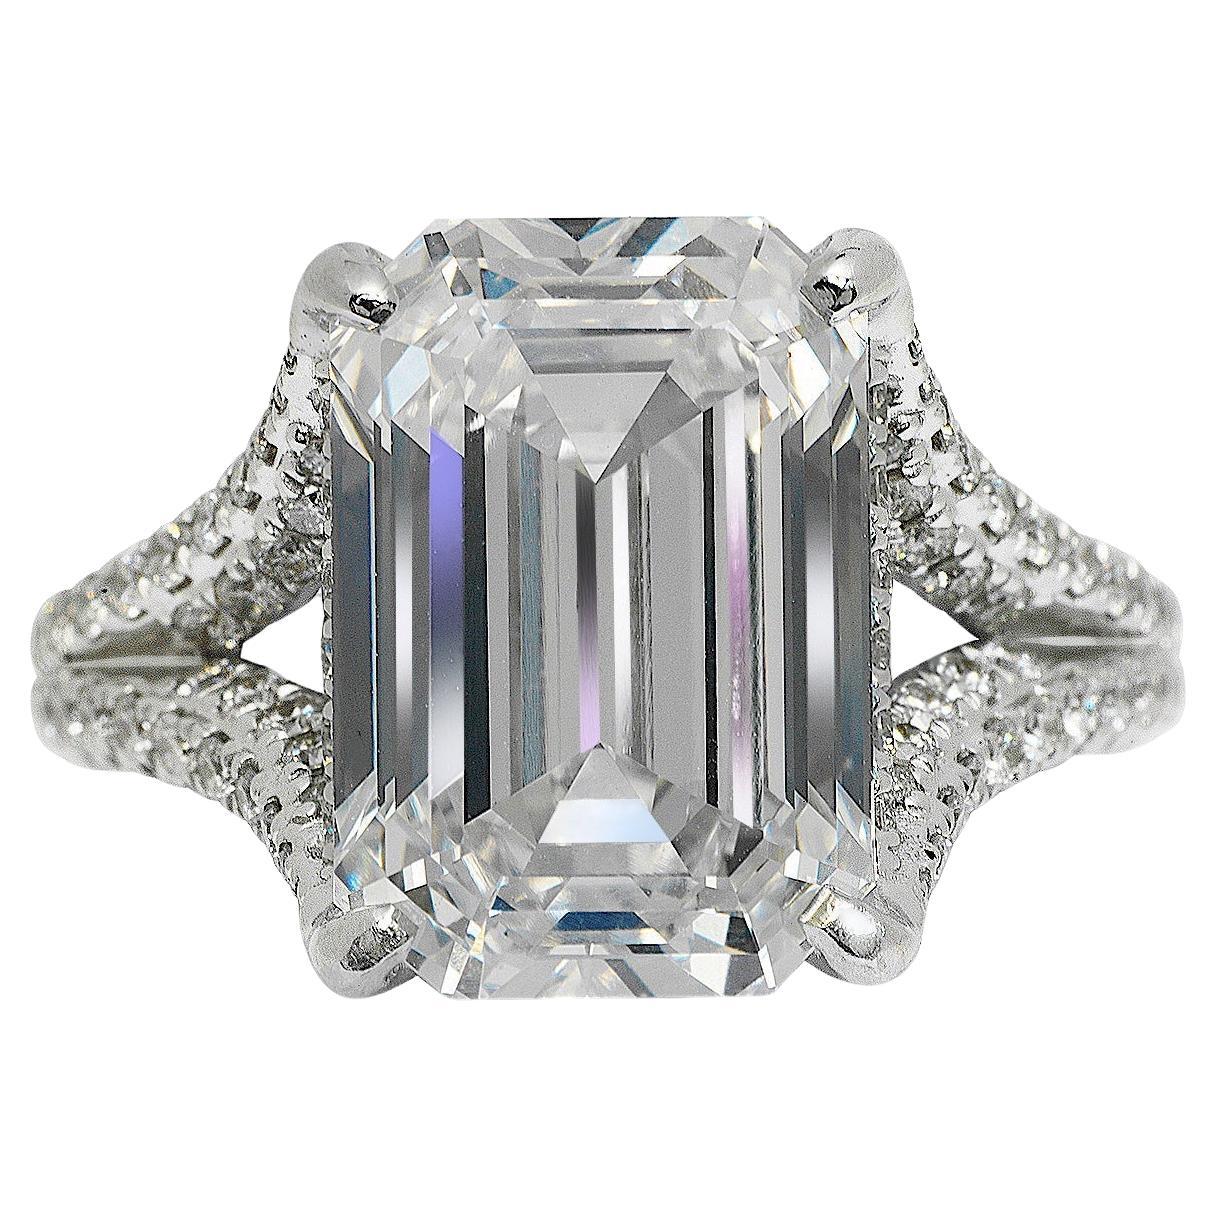 8 Carat Emerald Cut Diamond Engagement Ring GIA Certified E VVS1